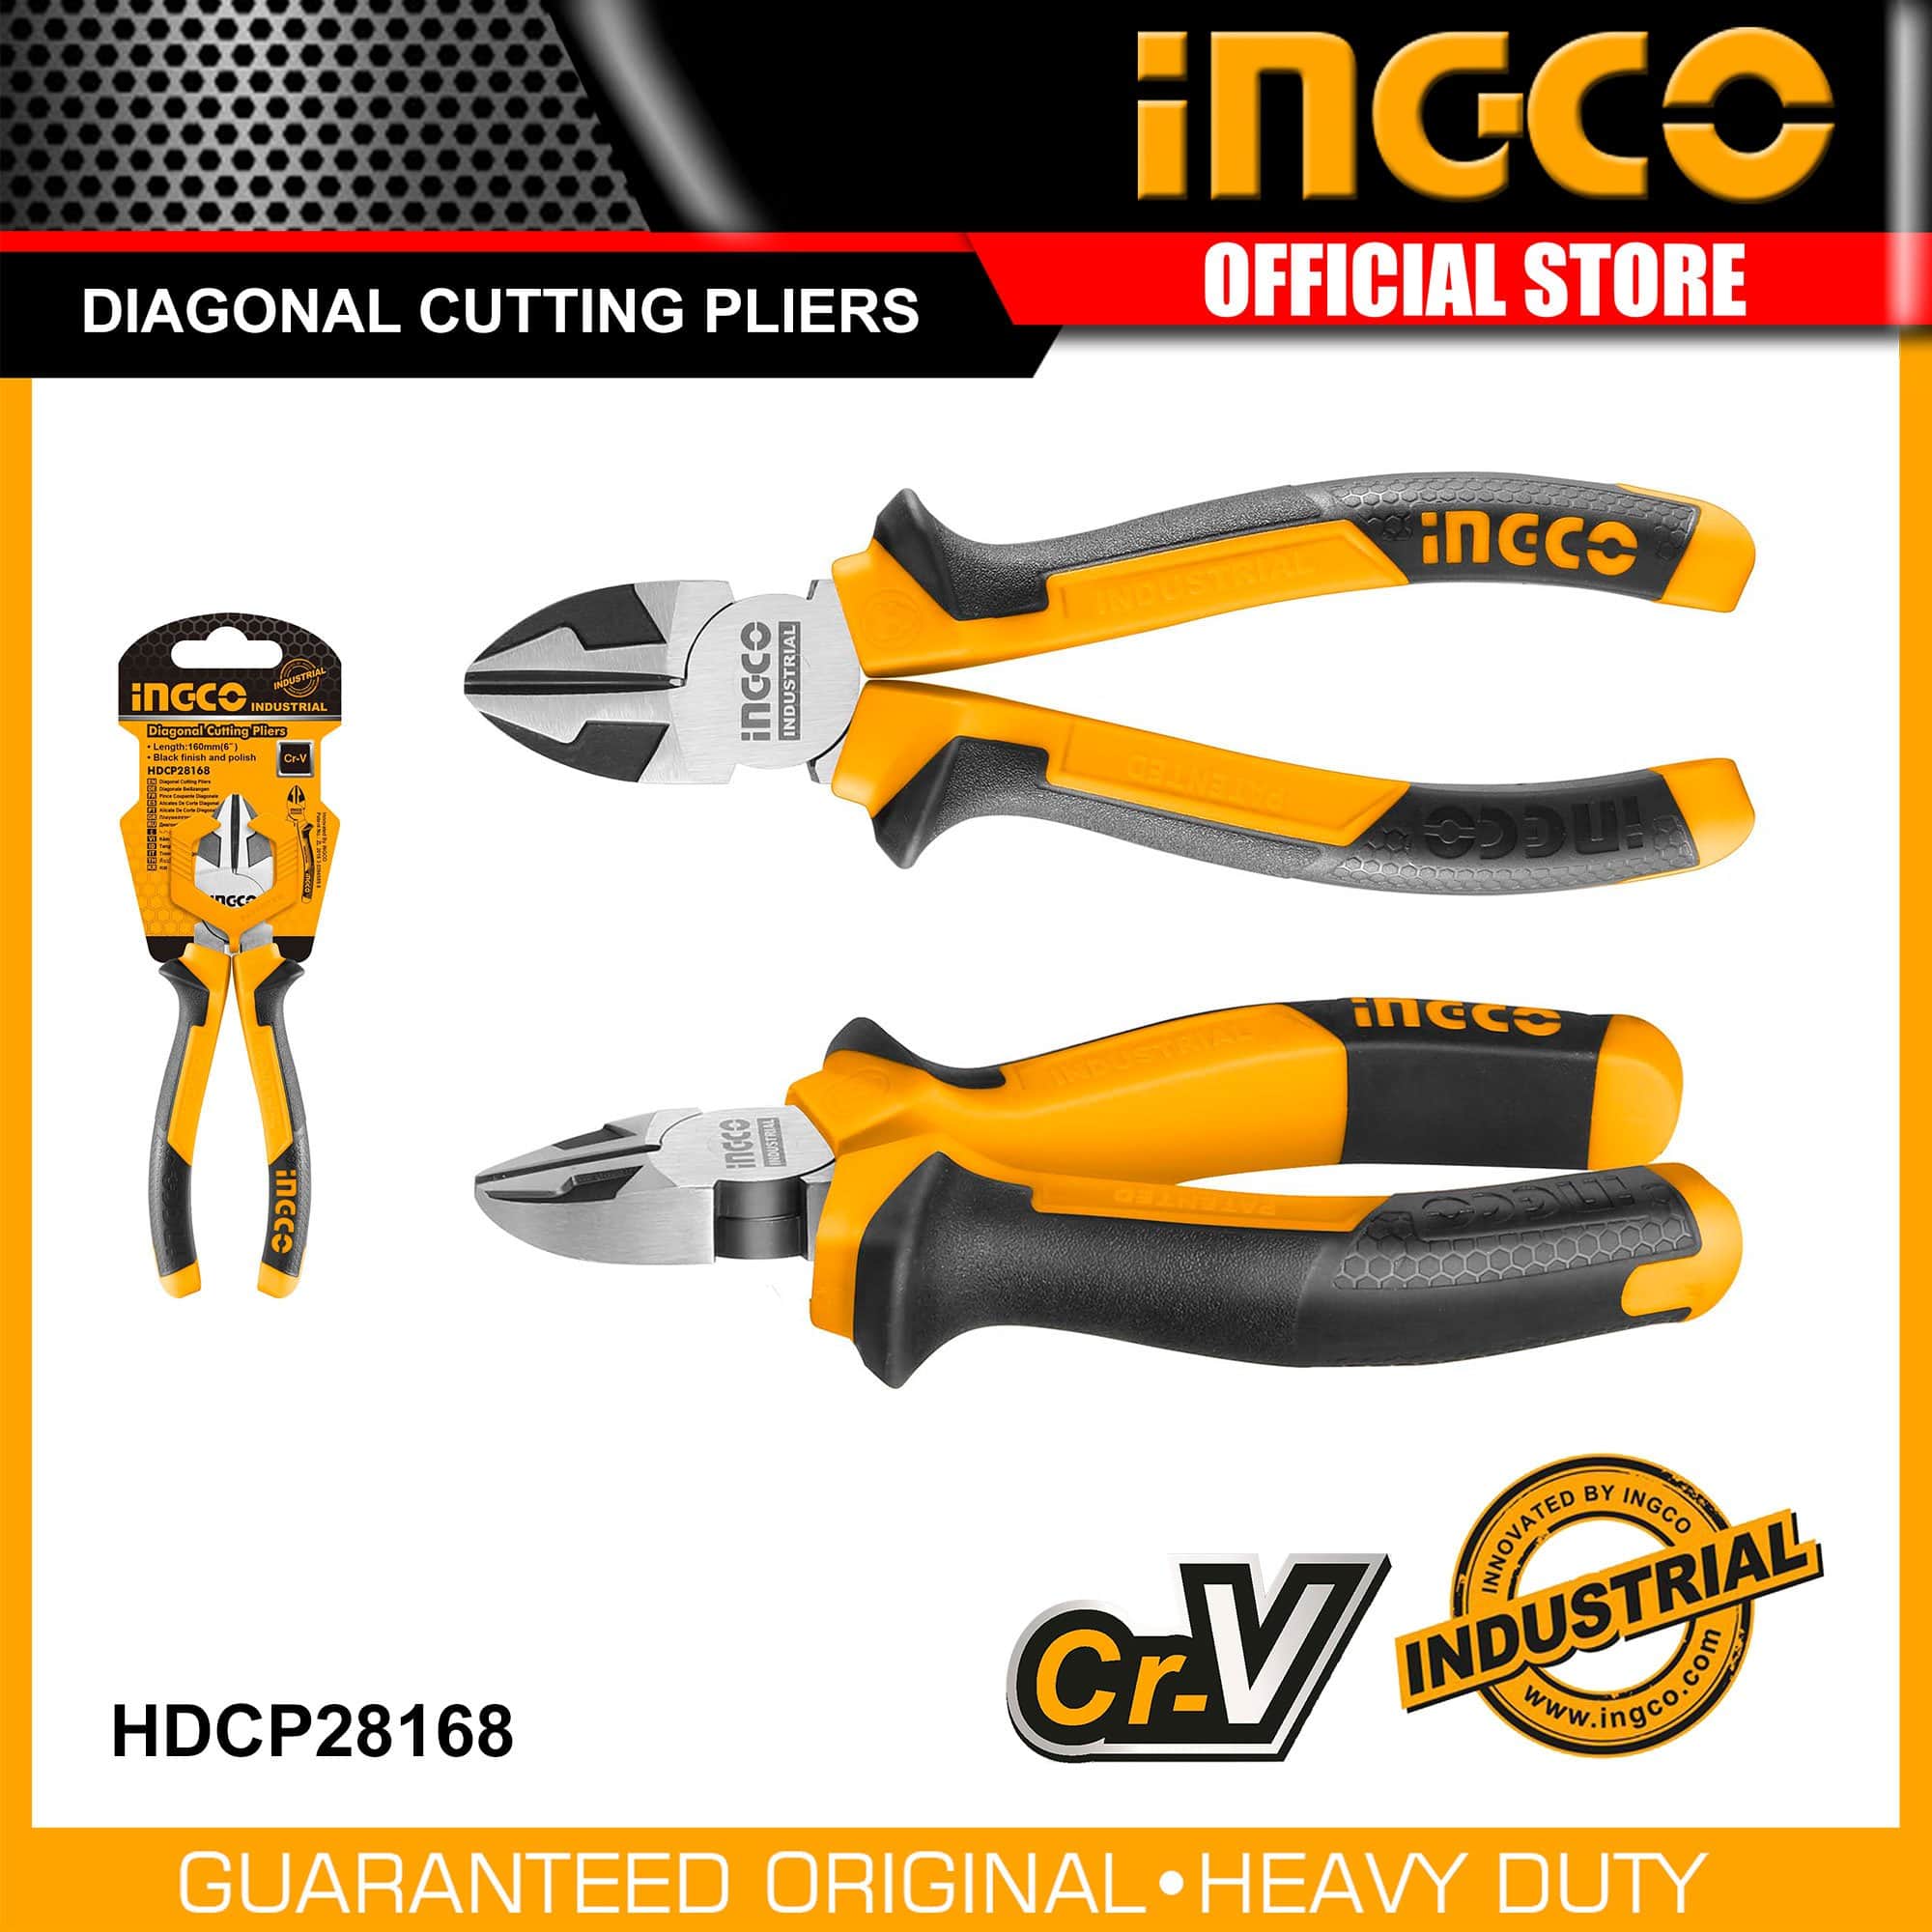 Ingco 6" Diagonal Cutting Plier - HDCP28168 | Supply Master | Accra, Ghana Tools Building Steel Engineering Hardware tool